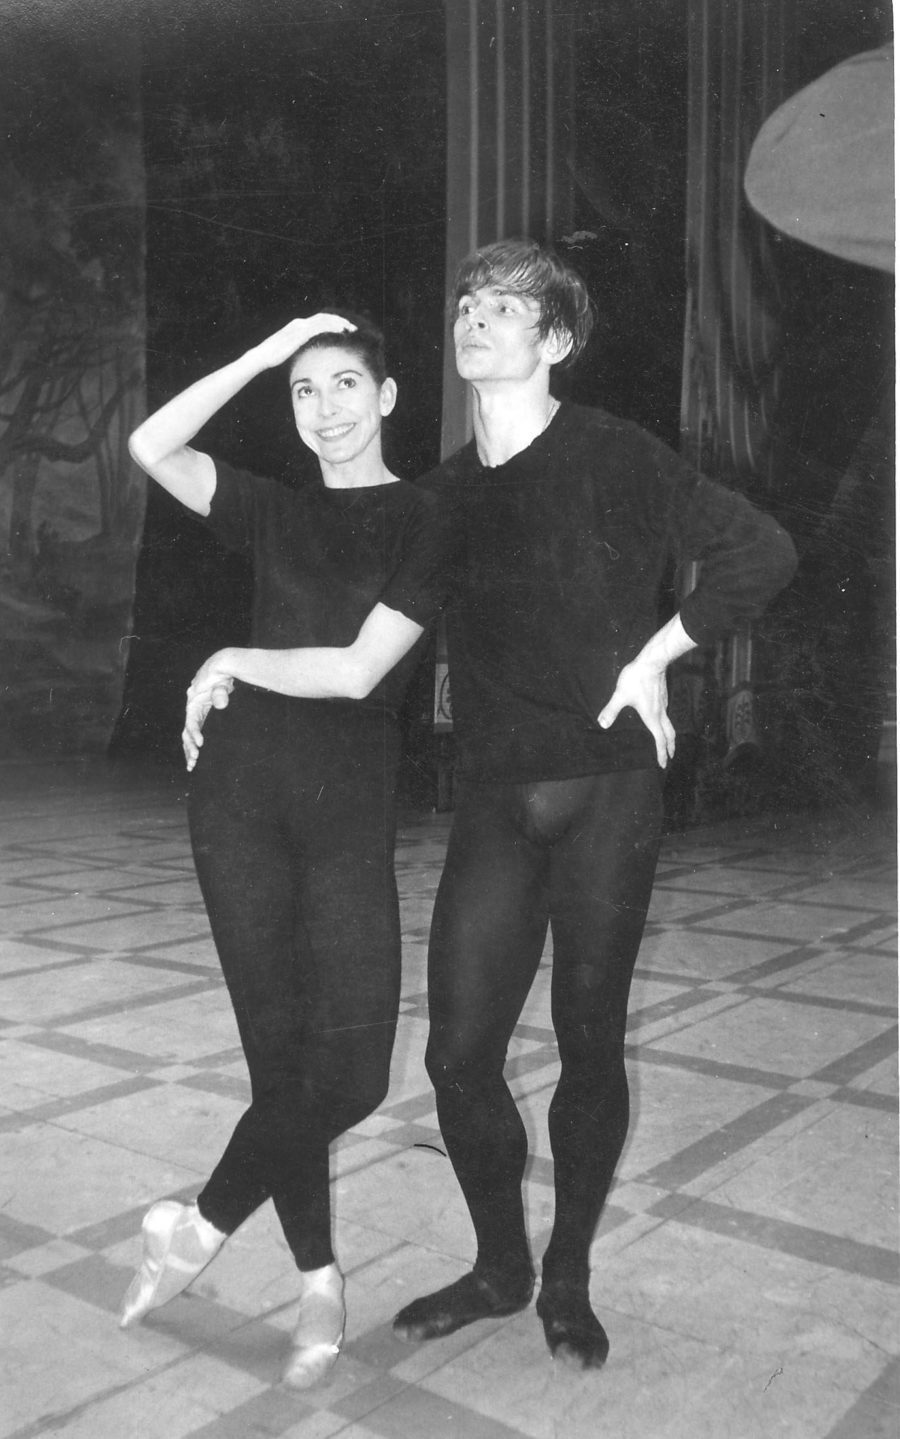 RUDOLF NUREYEV and MARGOT FONTEYN at rehearsals for Royal Academy of Dance Gala - Drury Lane 1963 Credit: Royal Academy of Dance / ArenaPAL www.arenapal.com